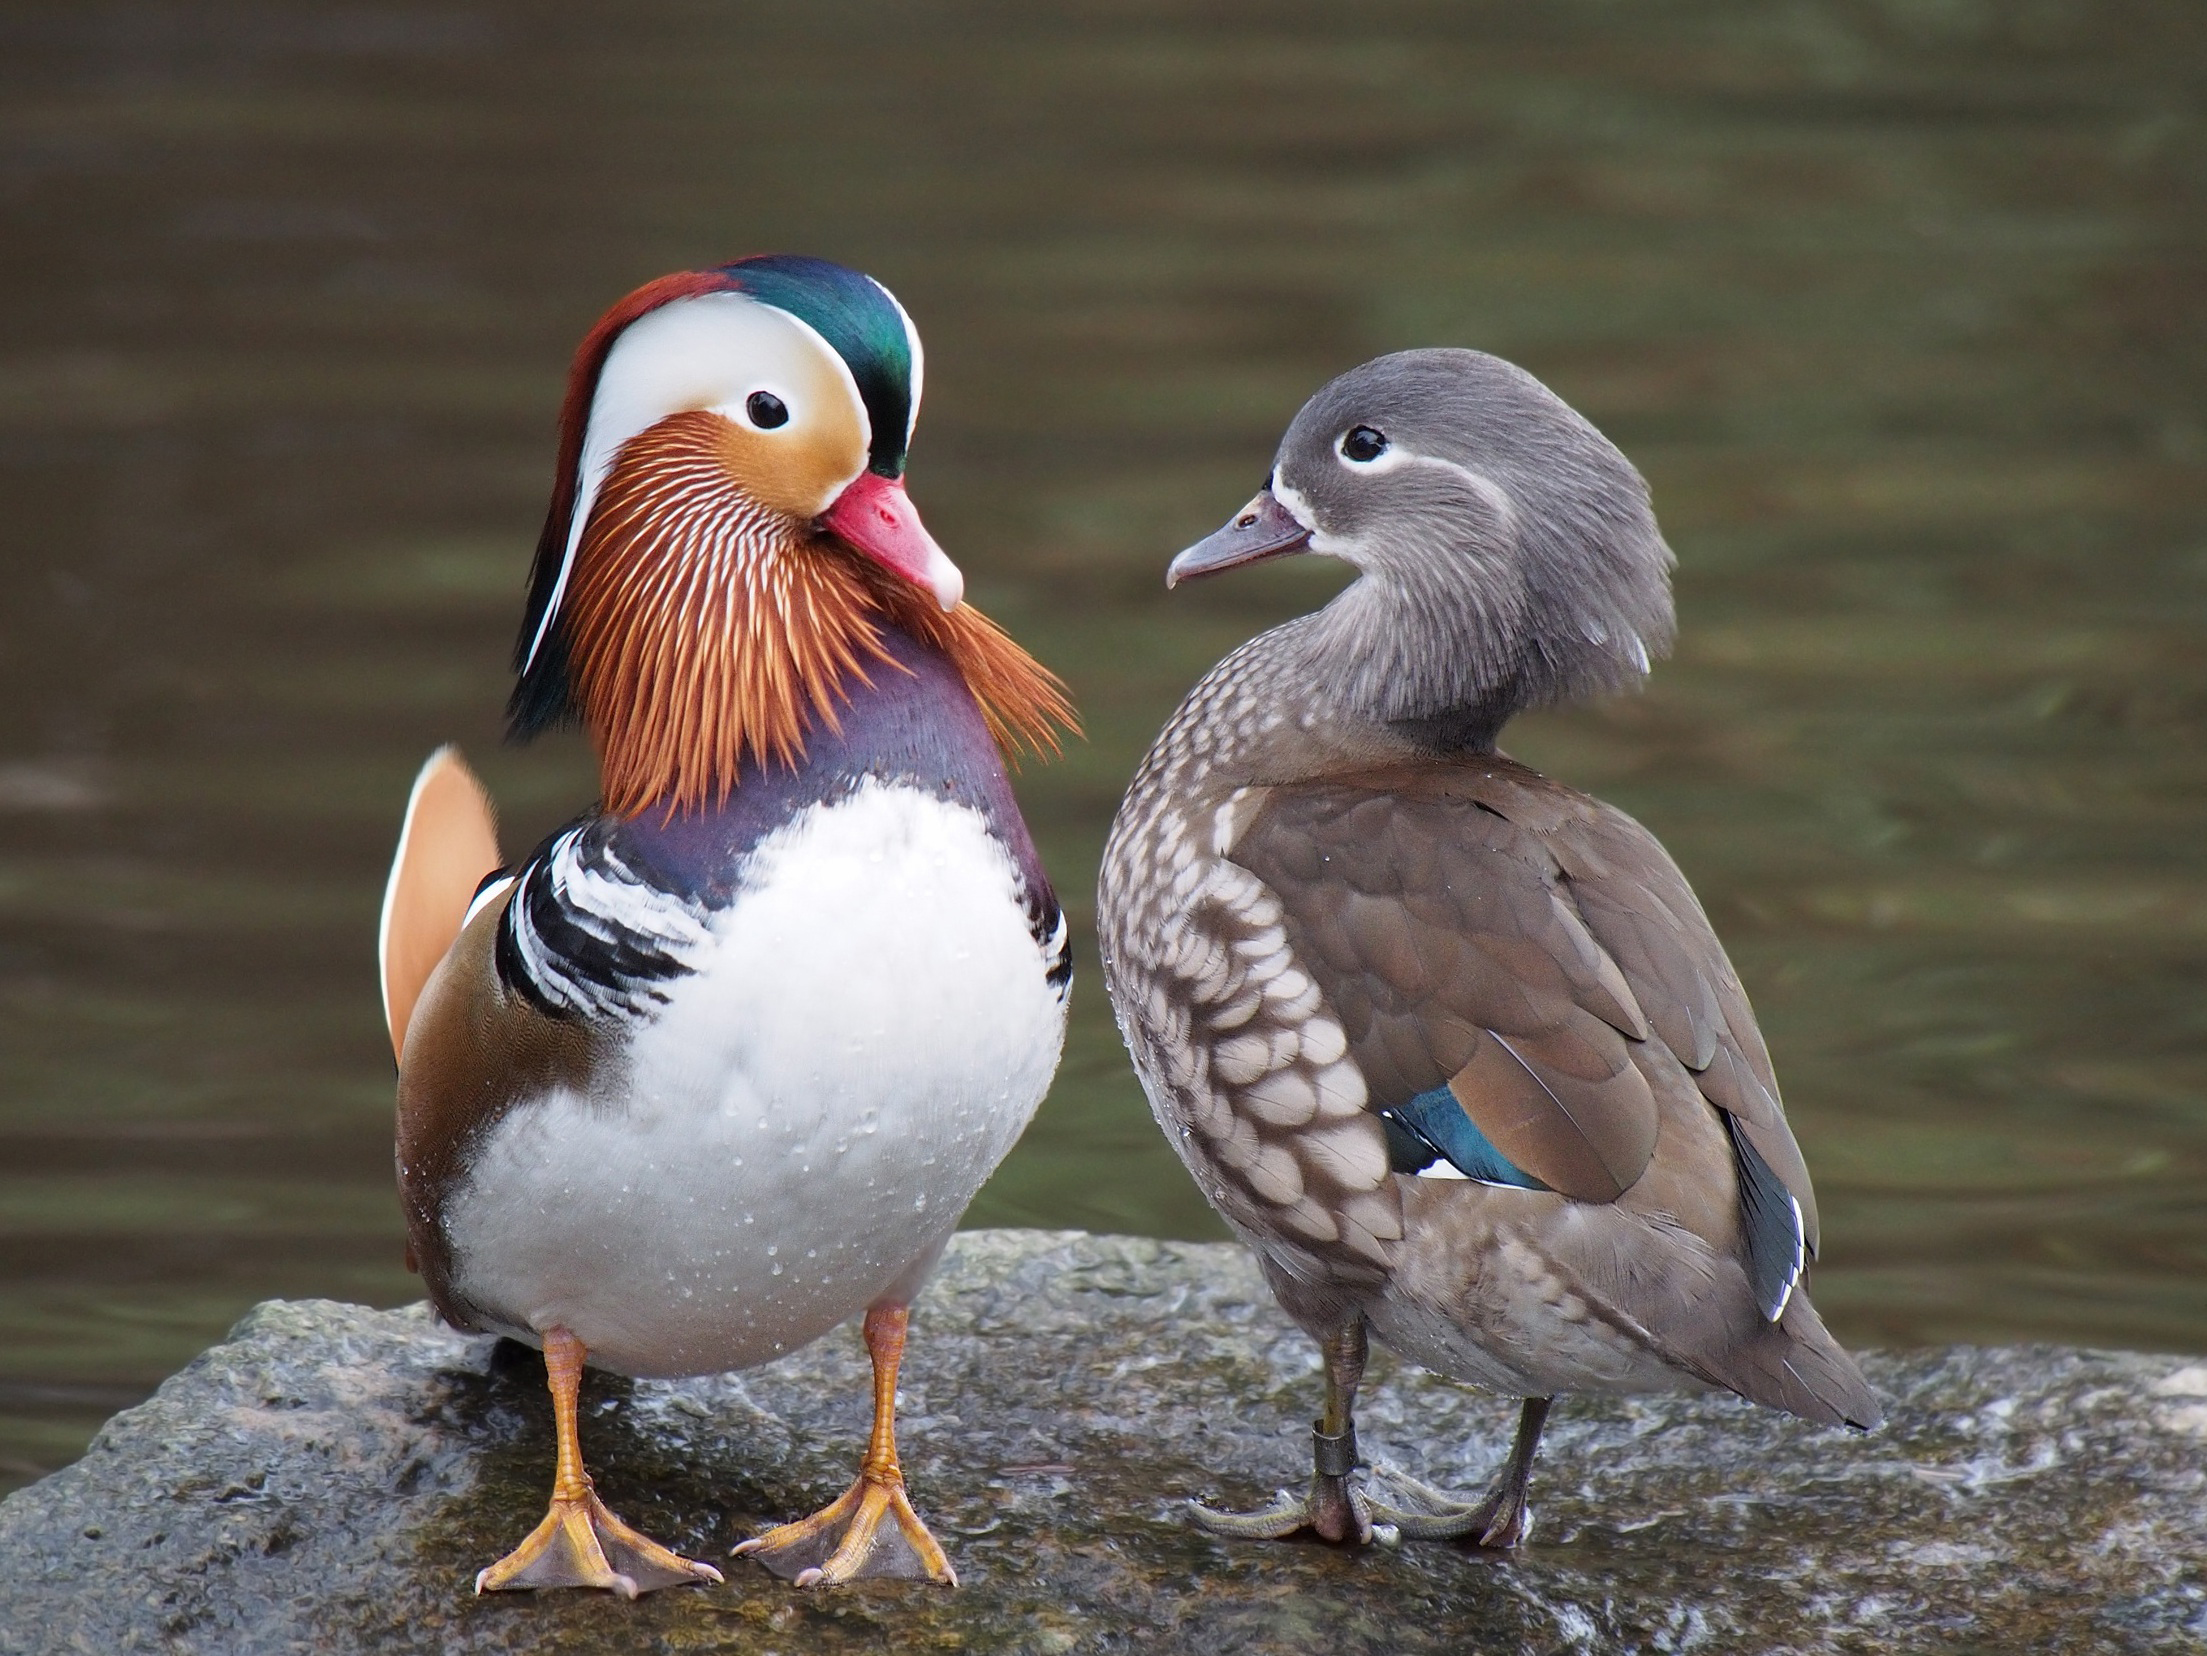 Mandarin duck - Wikipedia